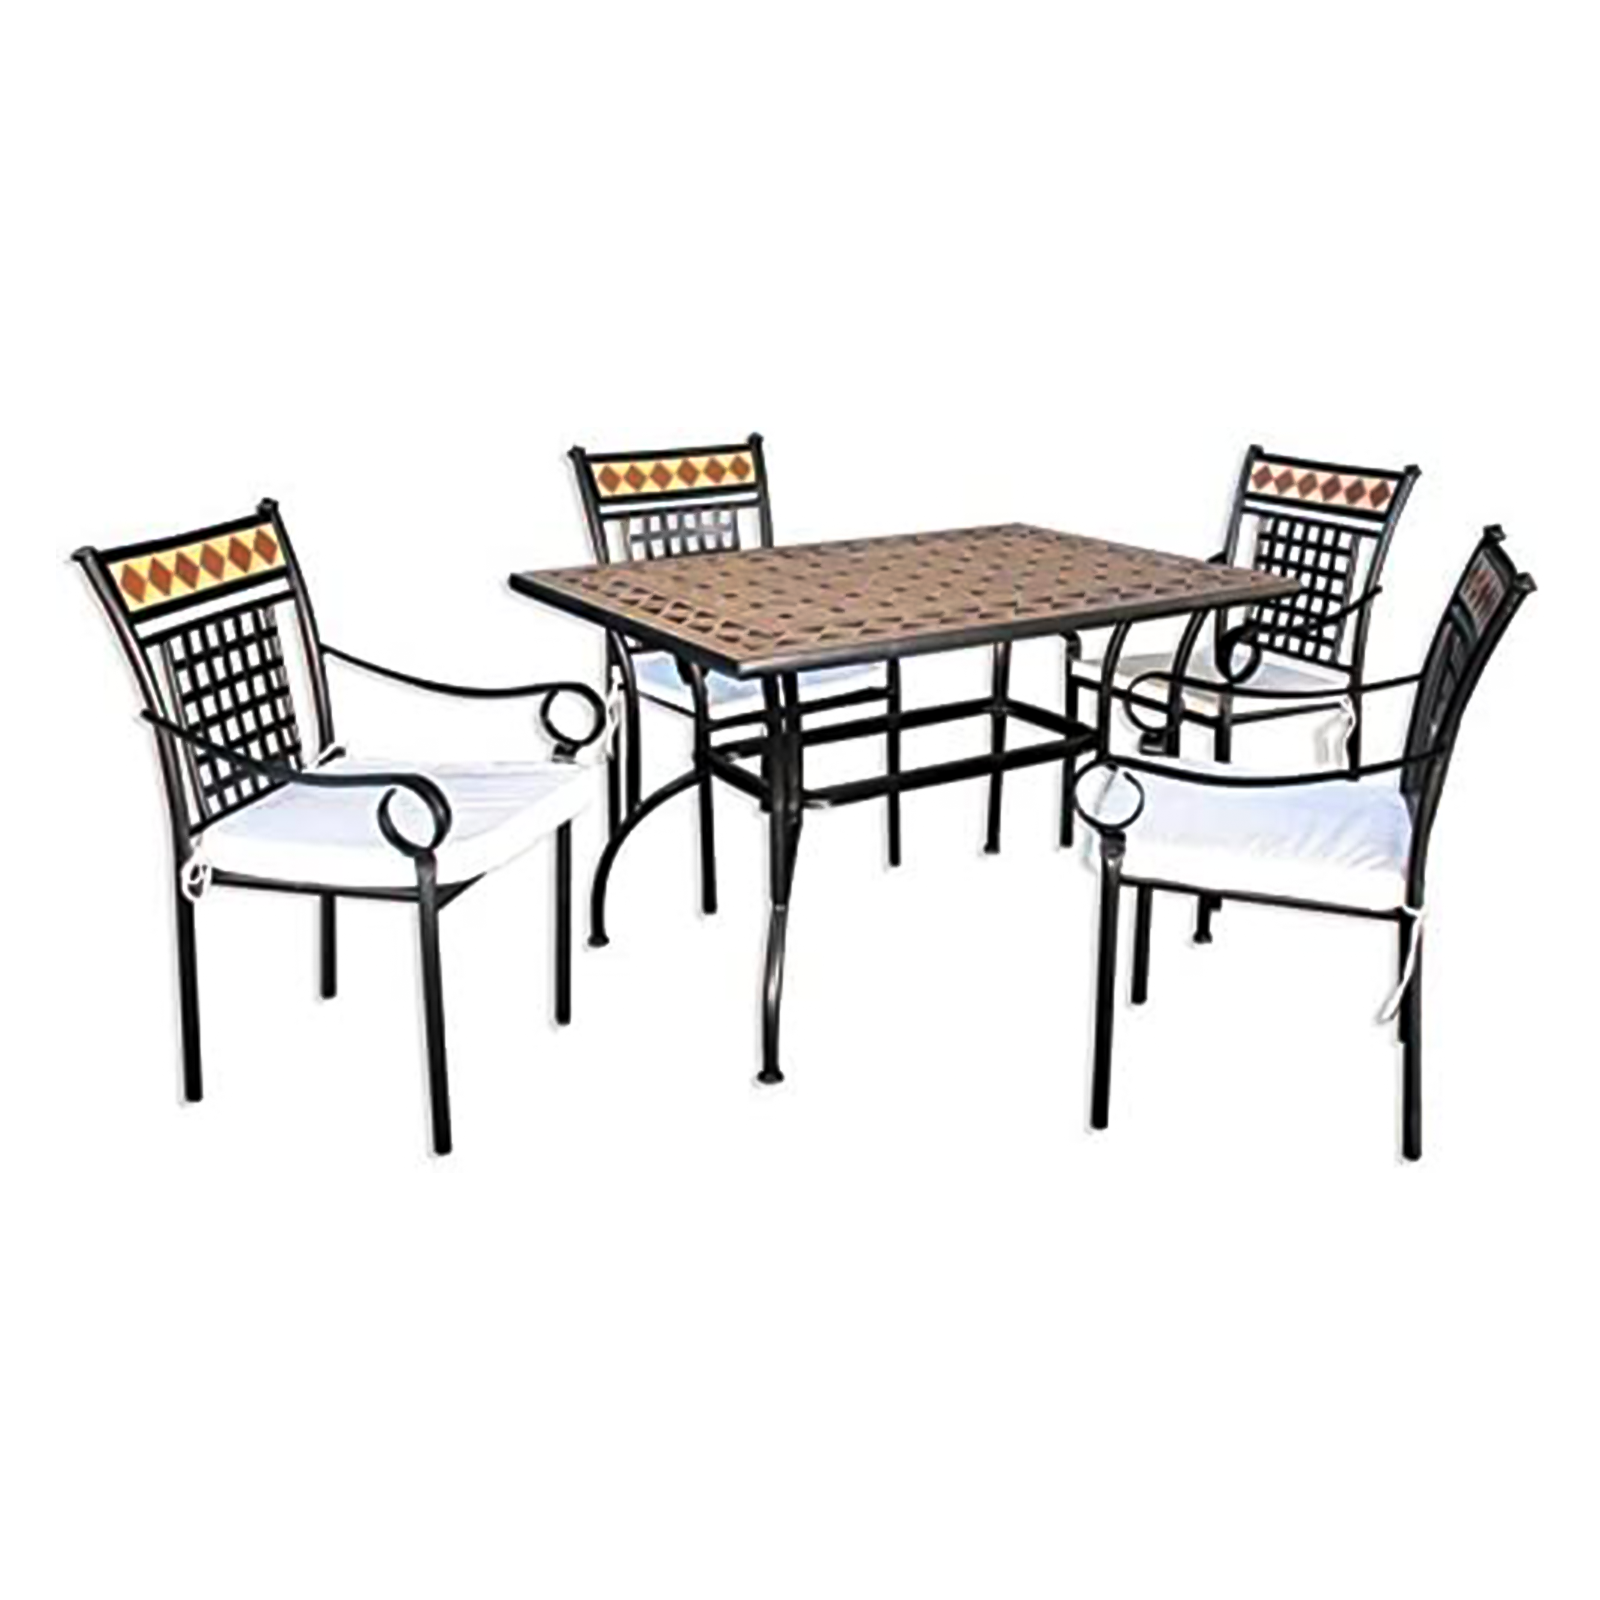 Set da pranzo completo di 2 sedie + tavolo Stilnovo in ceramica per giardino cm120x80 h72